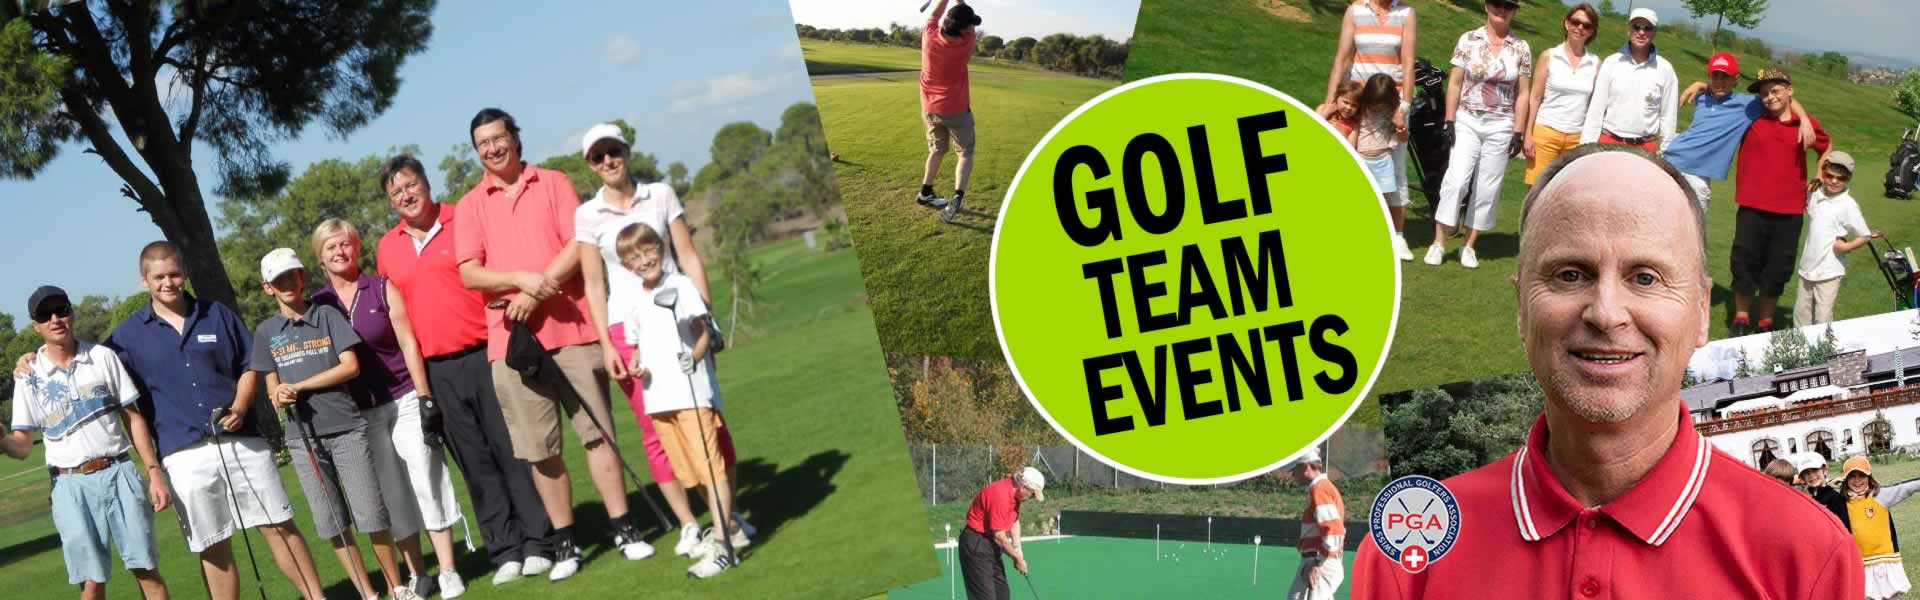 B-Golf-TEAM-Firmenevents-Golf-Eveents-Pro-Lehrer-Golfstunden-Zuerich-Thierry-Rombaldi-01a